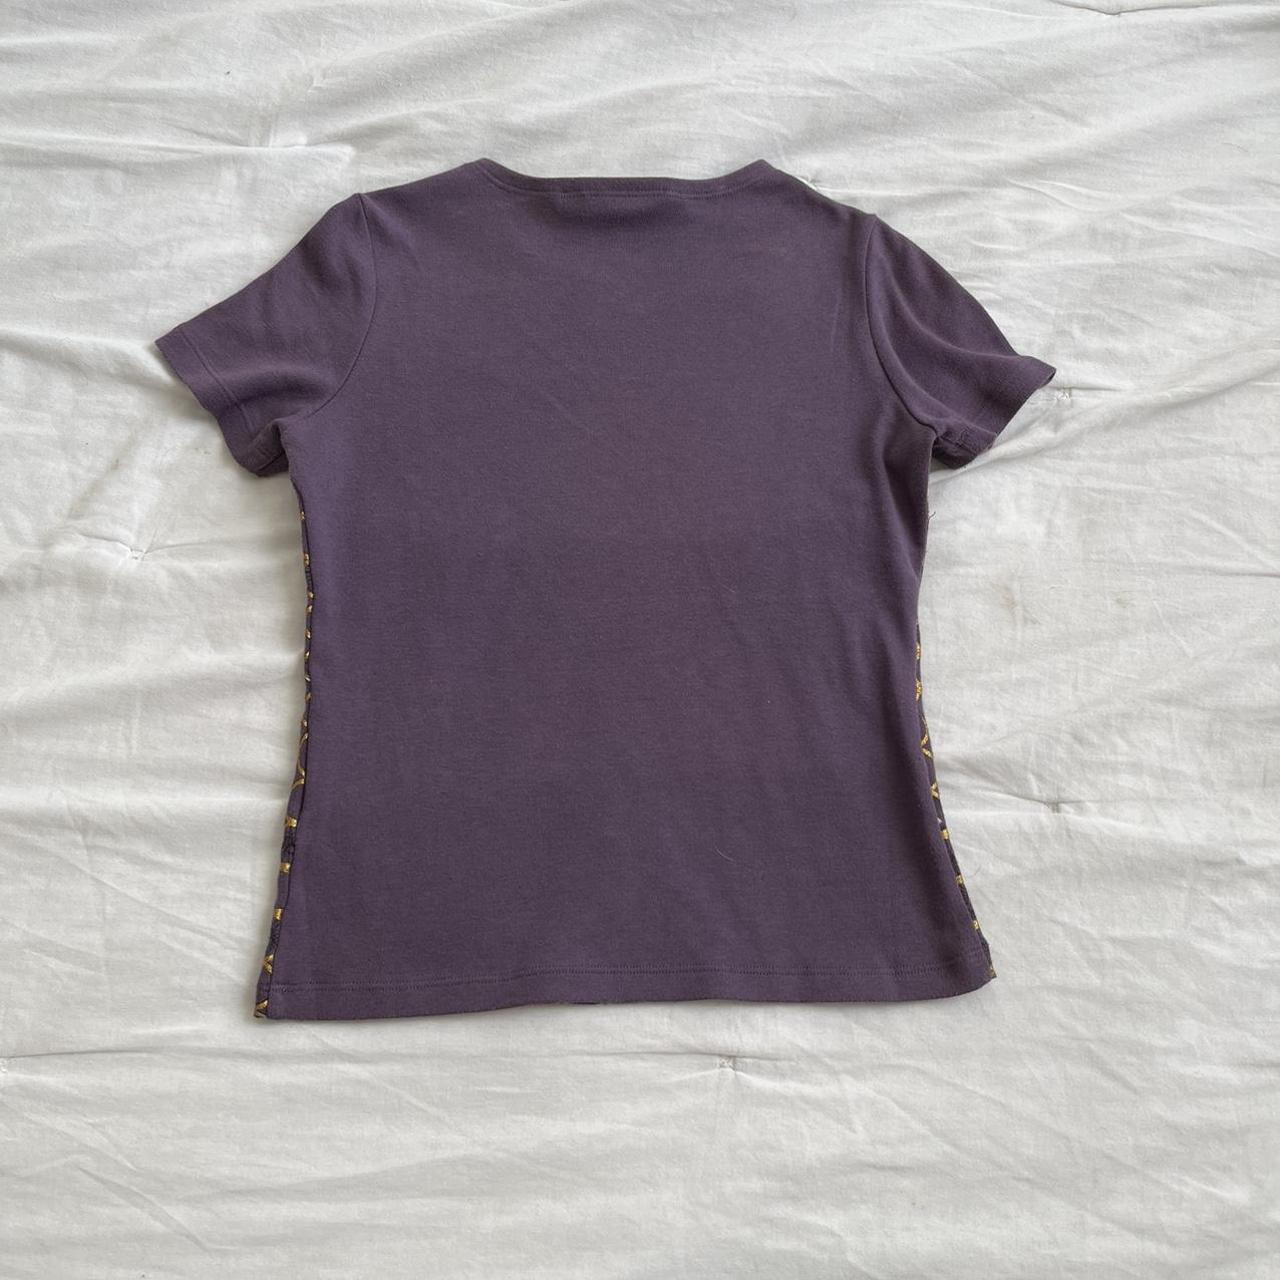 Fendi Women's Purple and Gold T-shirt (4)